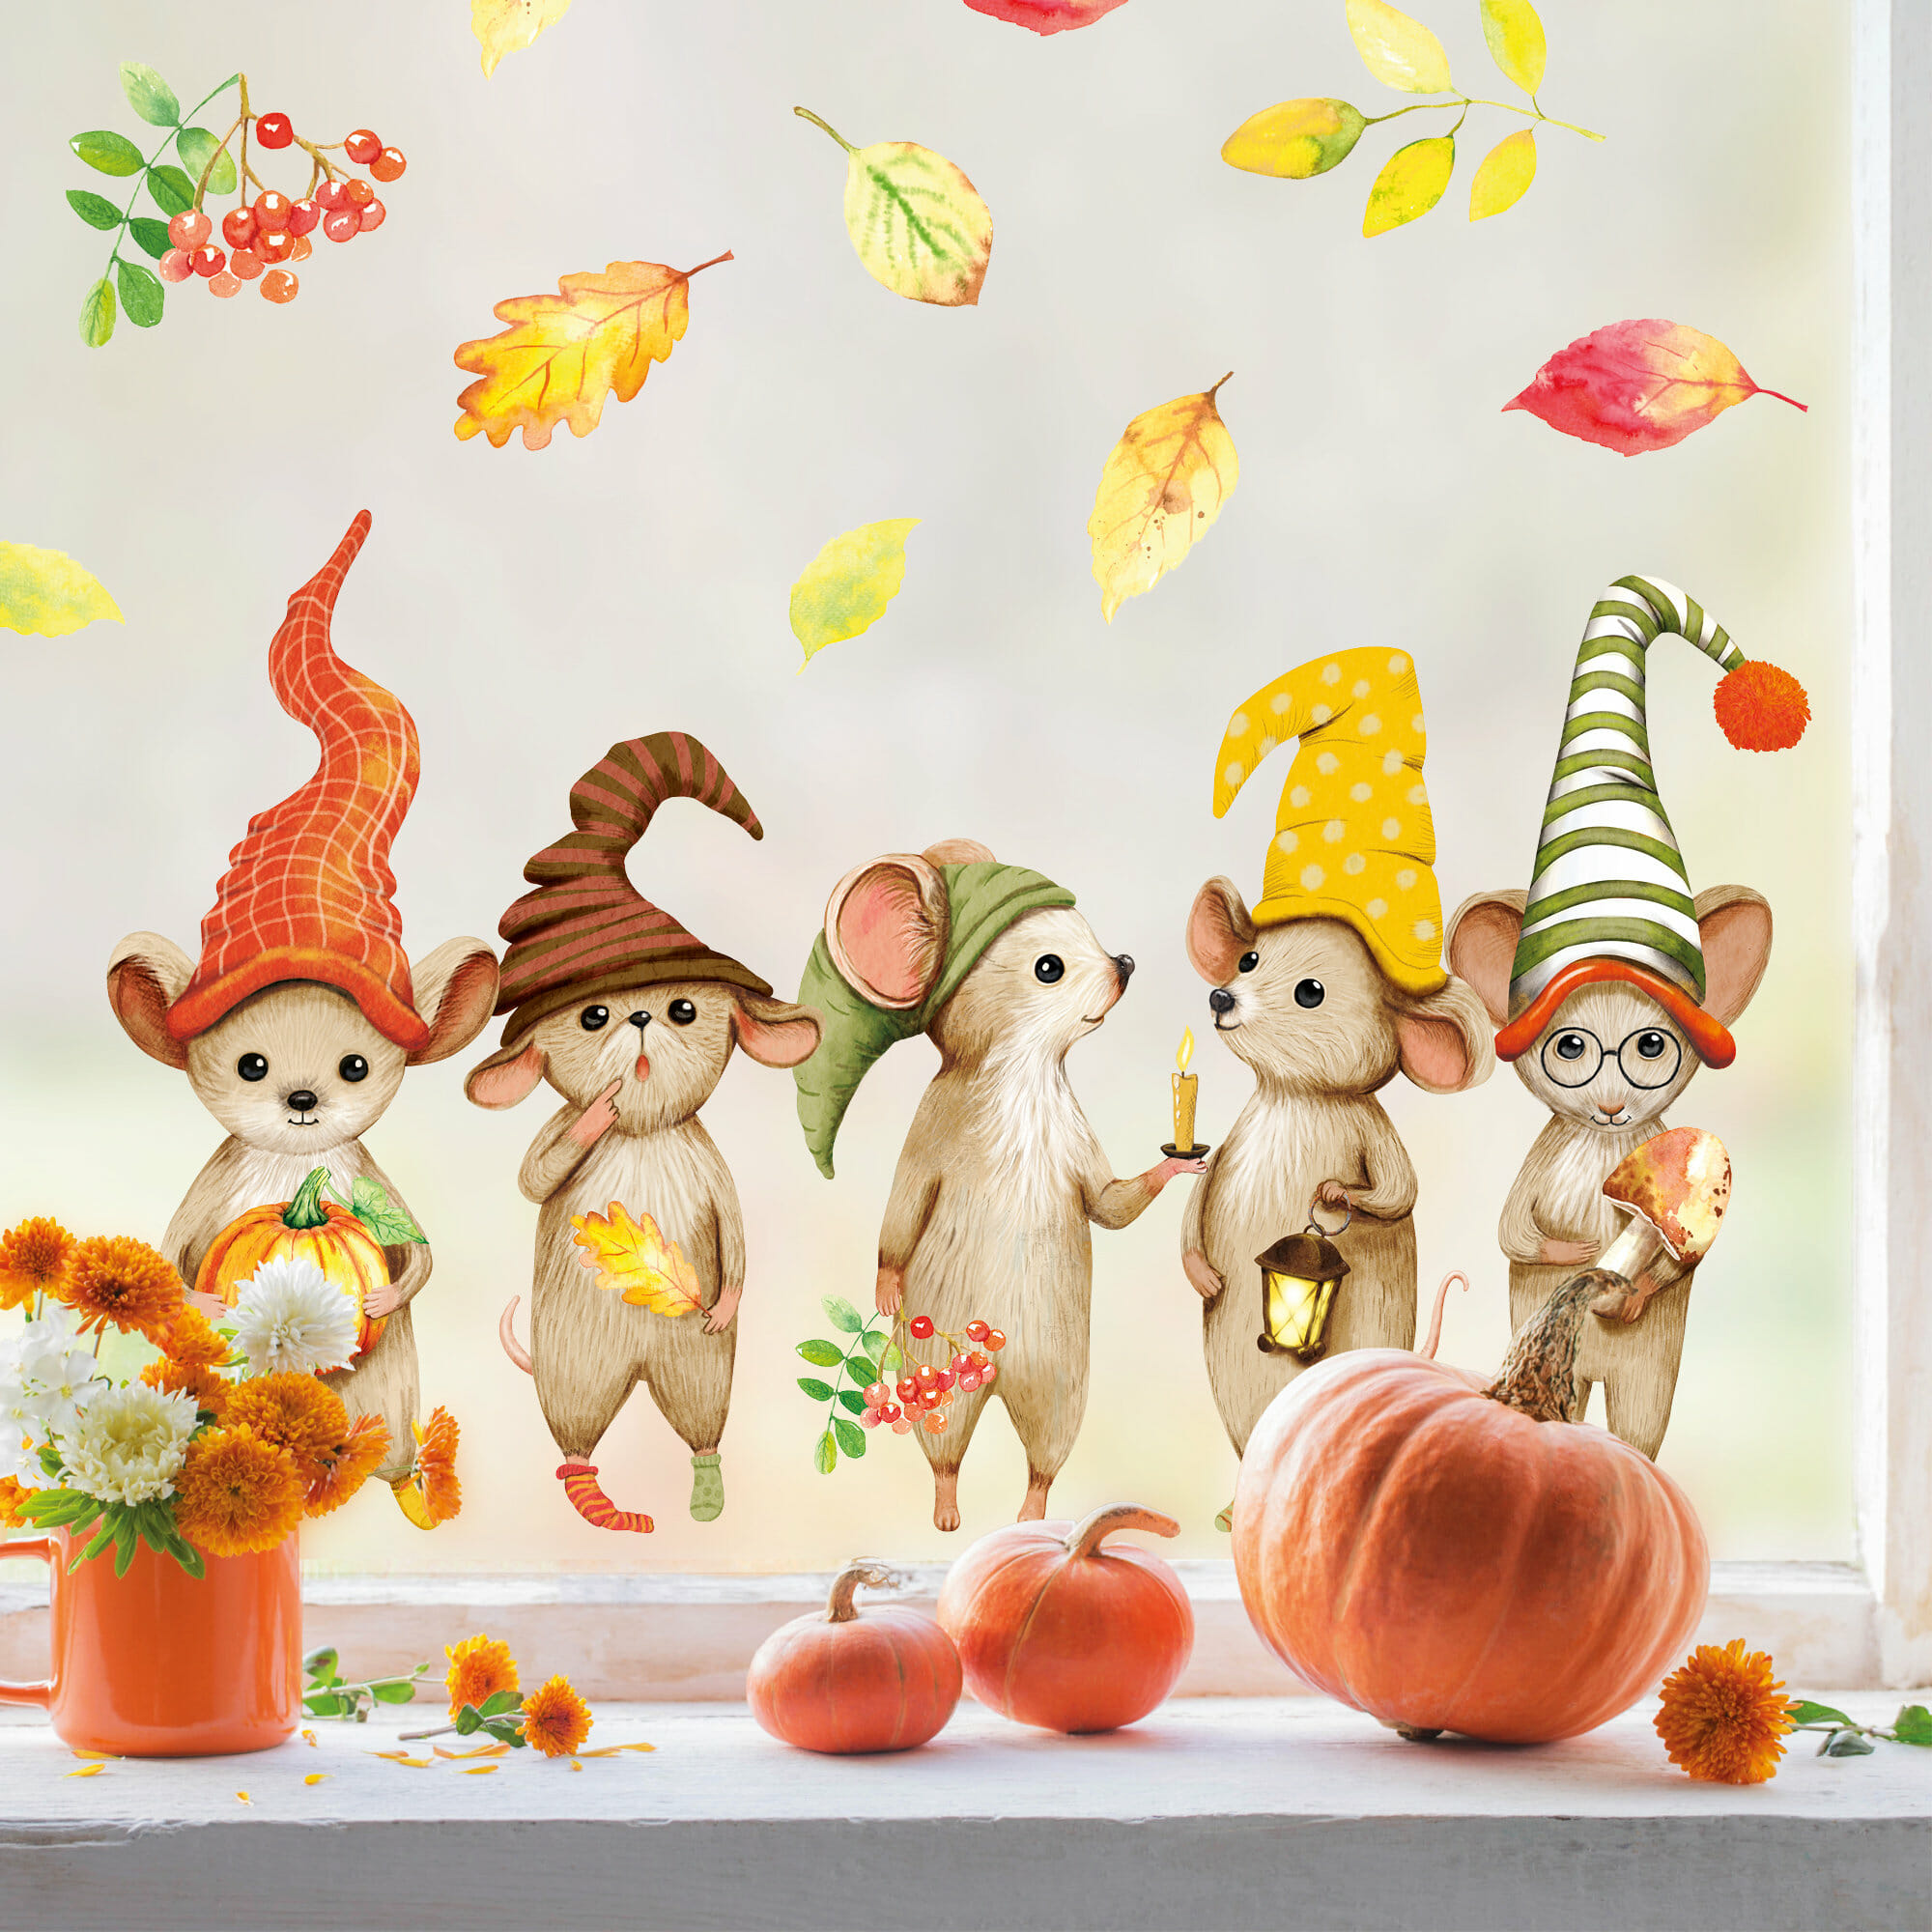 Fensteraufkleber Herbst Mäuse mit Blättern und Kürbis herbstlicher Fensteraufkleber Fensterdeko